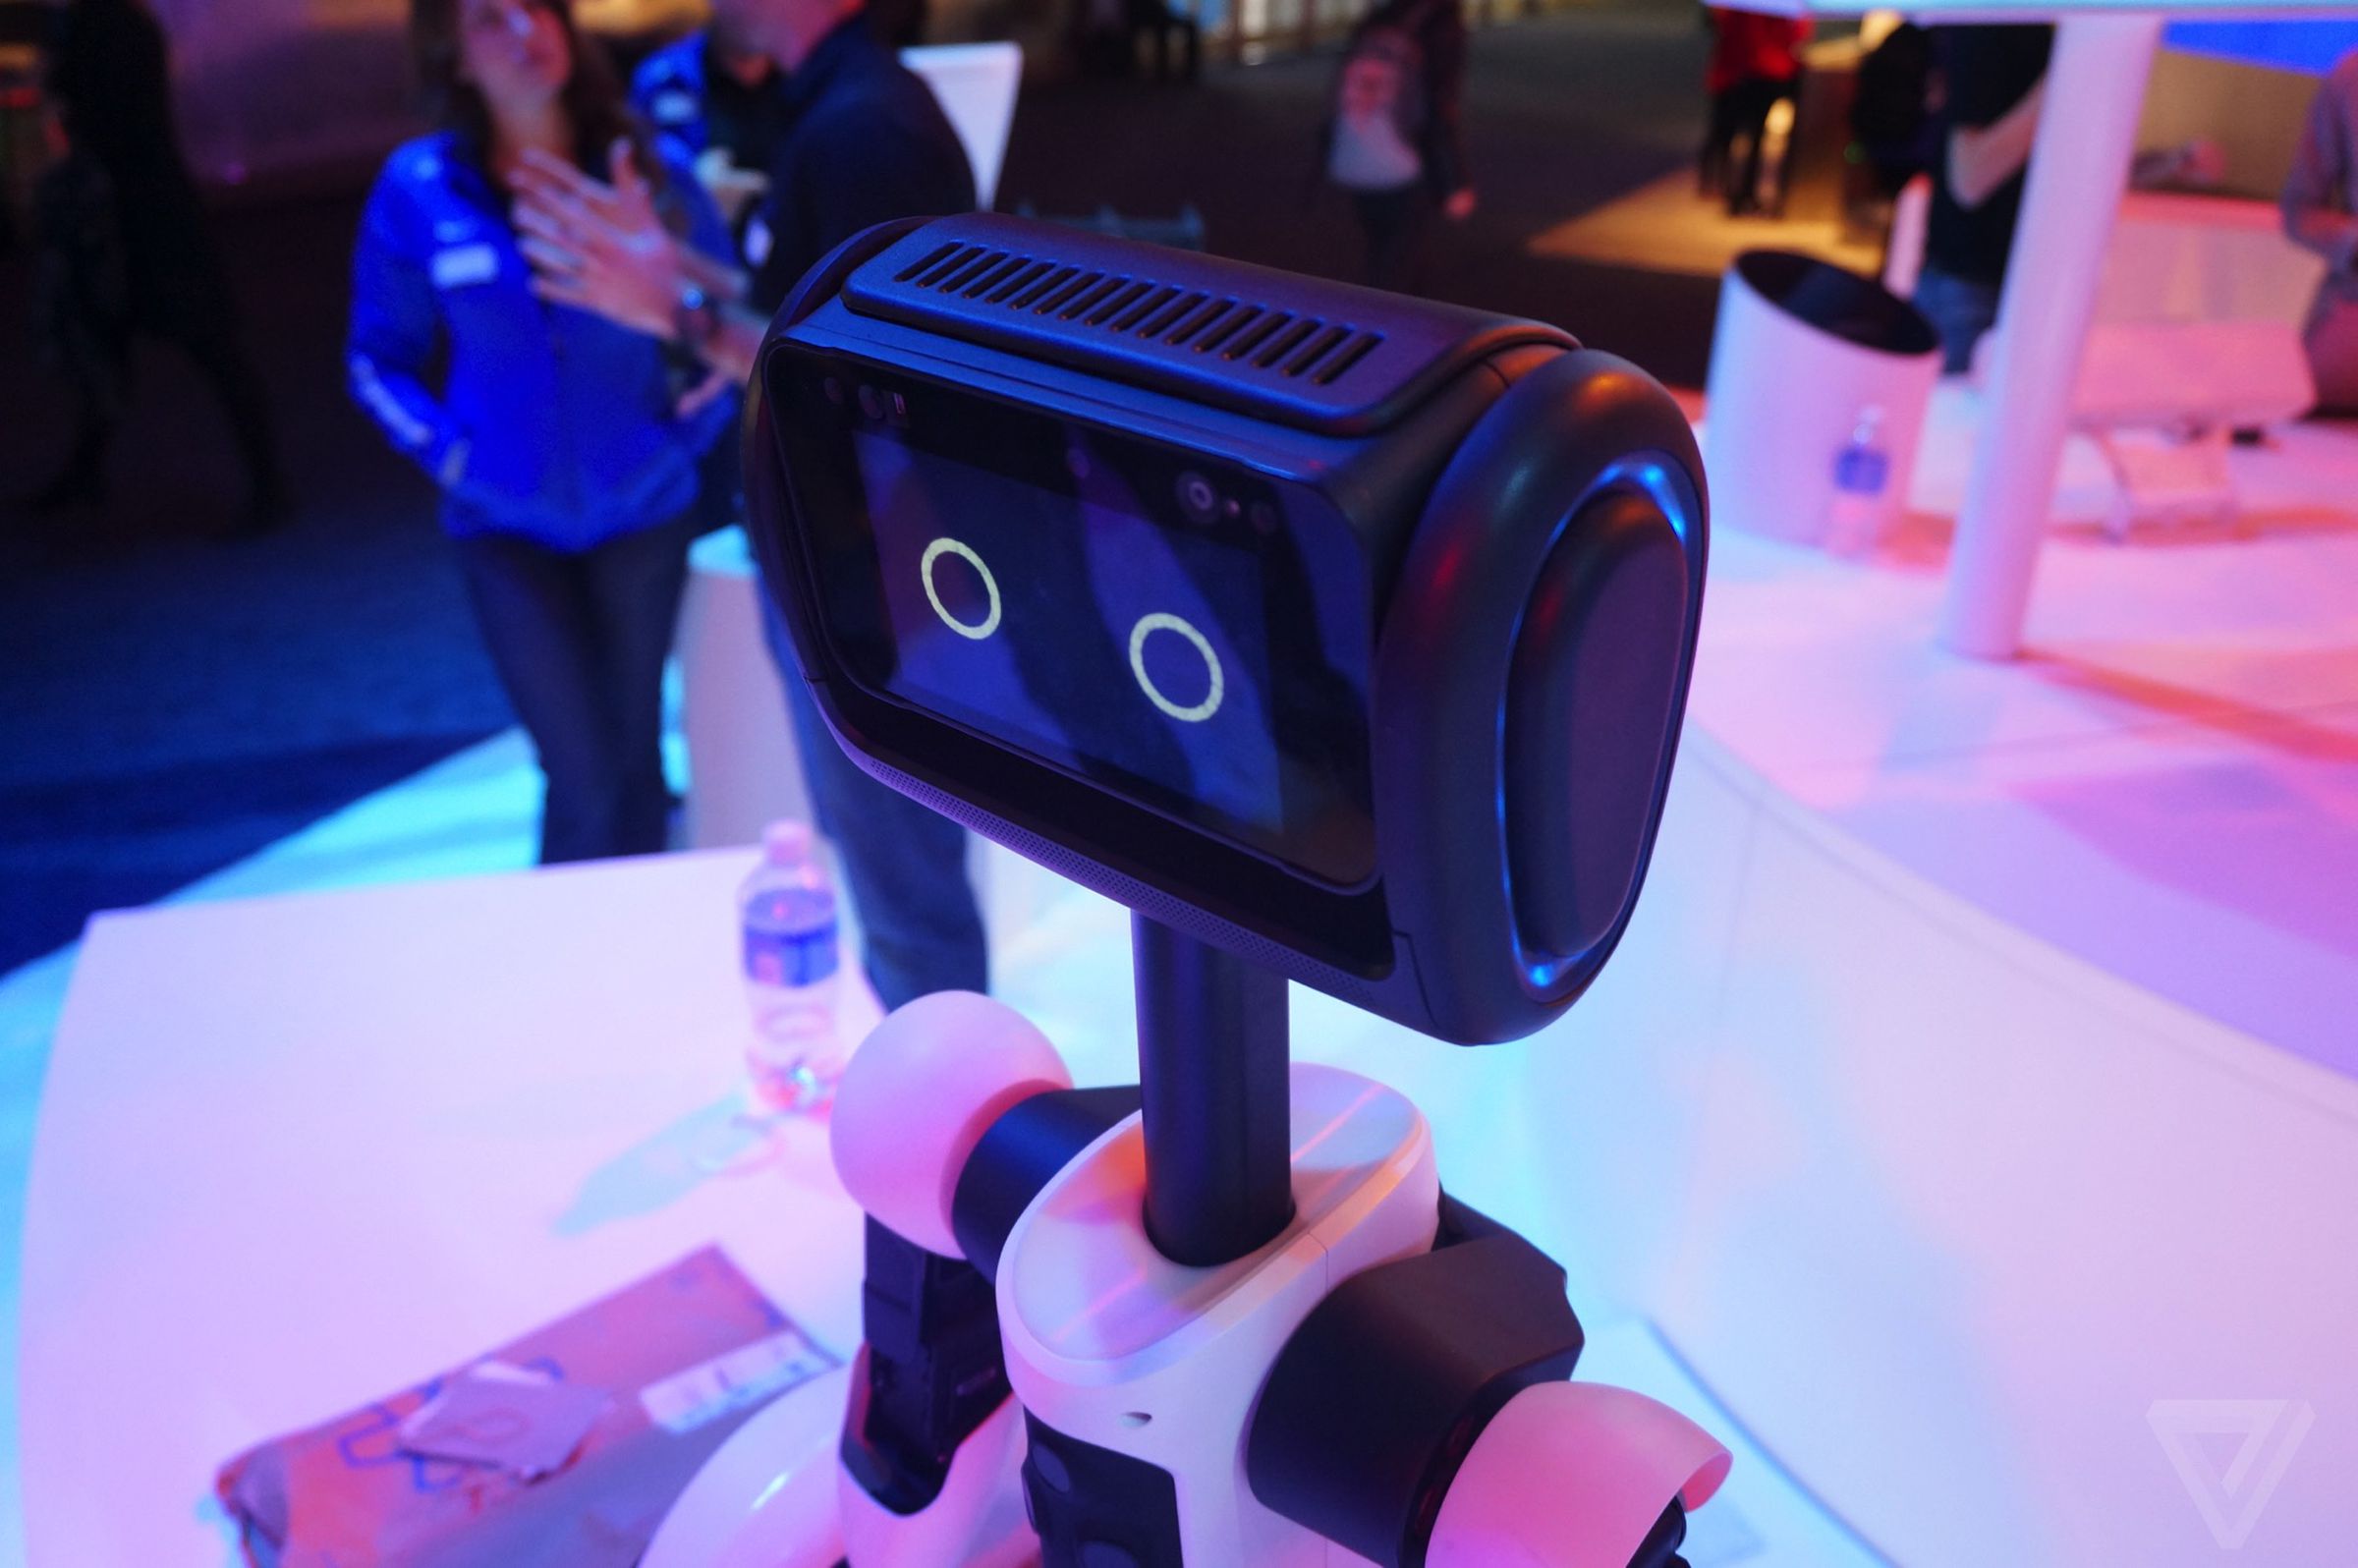 Segway Robot Butler hands-on photos